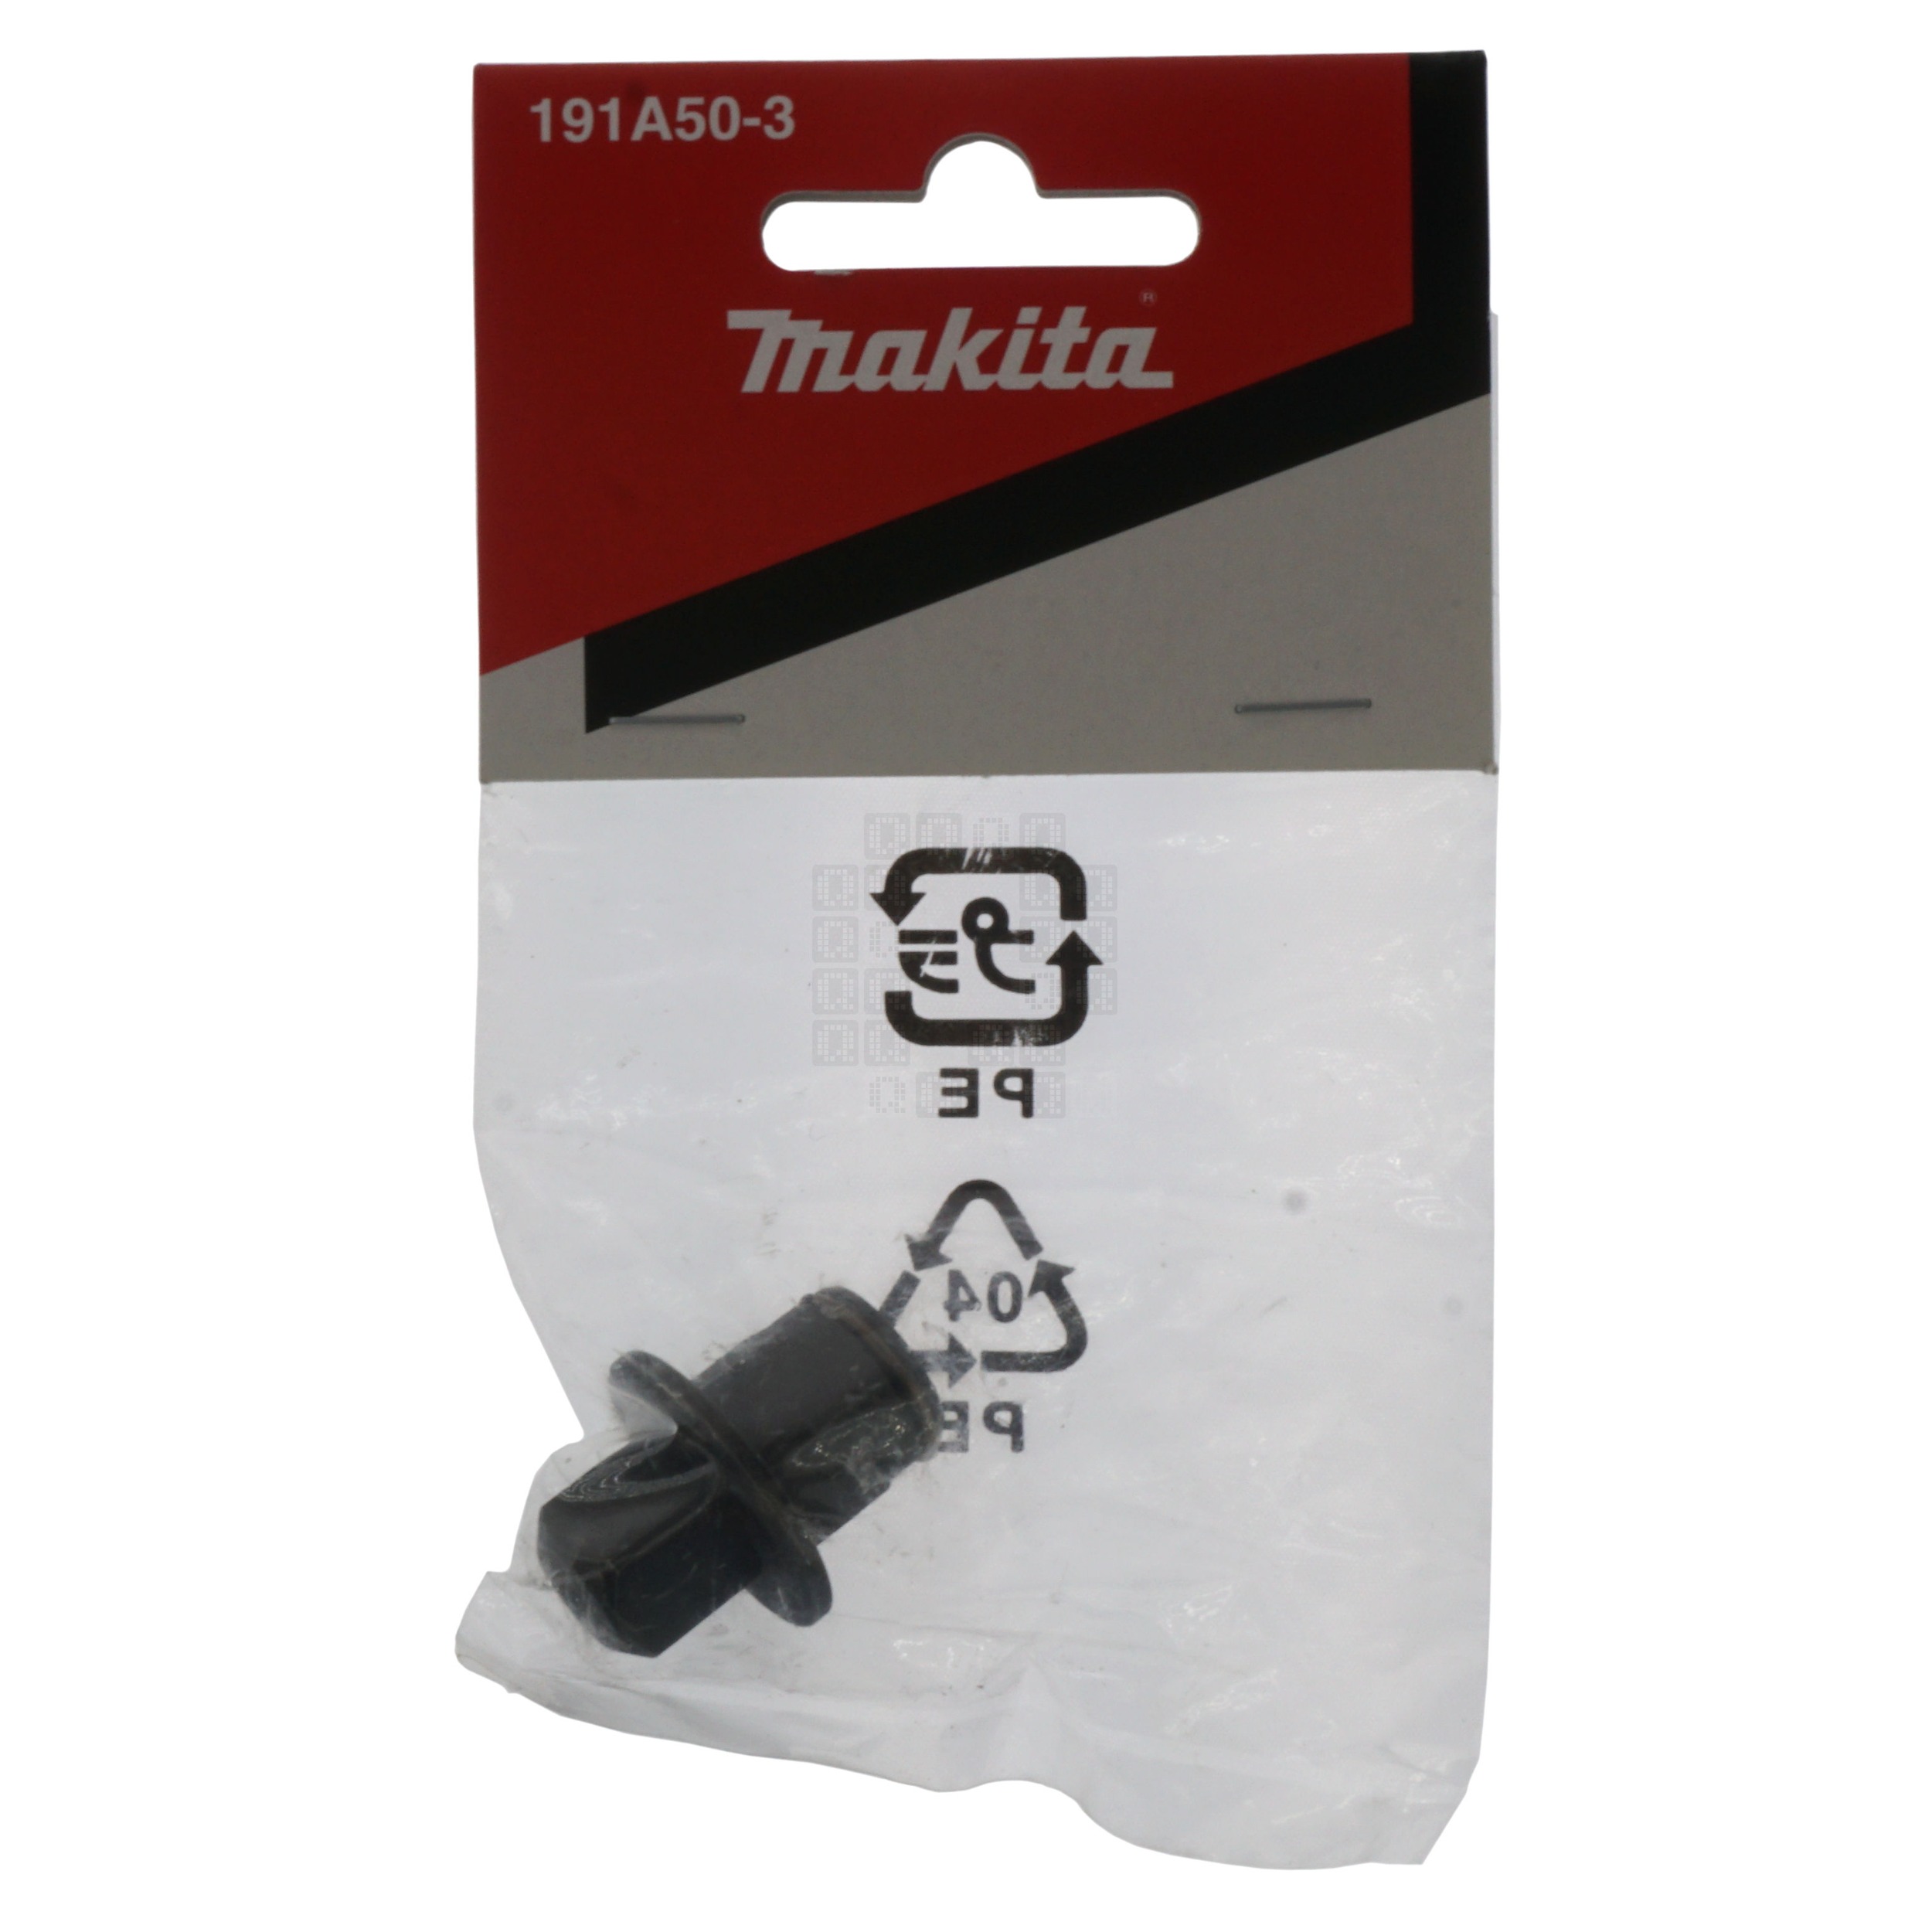 Makita 191A50-3 3/8" Square Drive Anvil Adapter, 832233-7